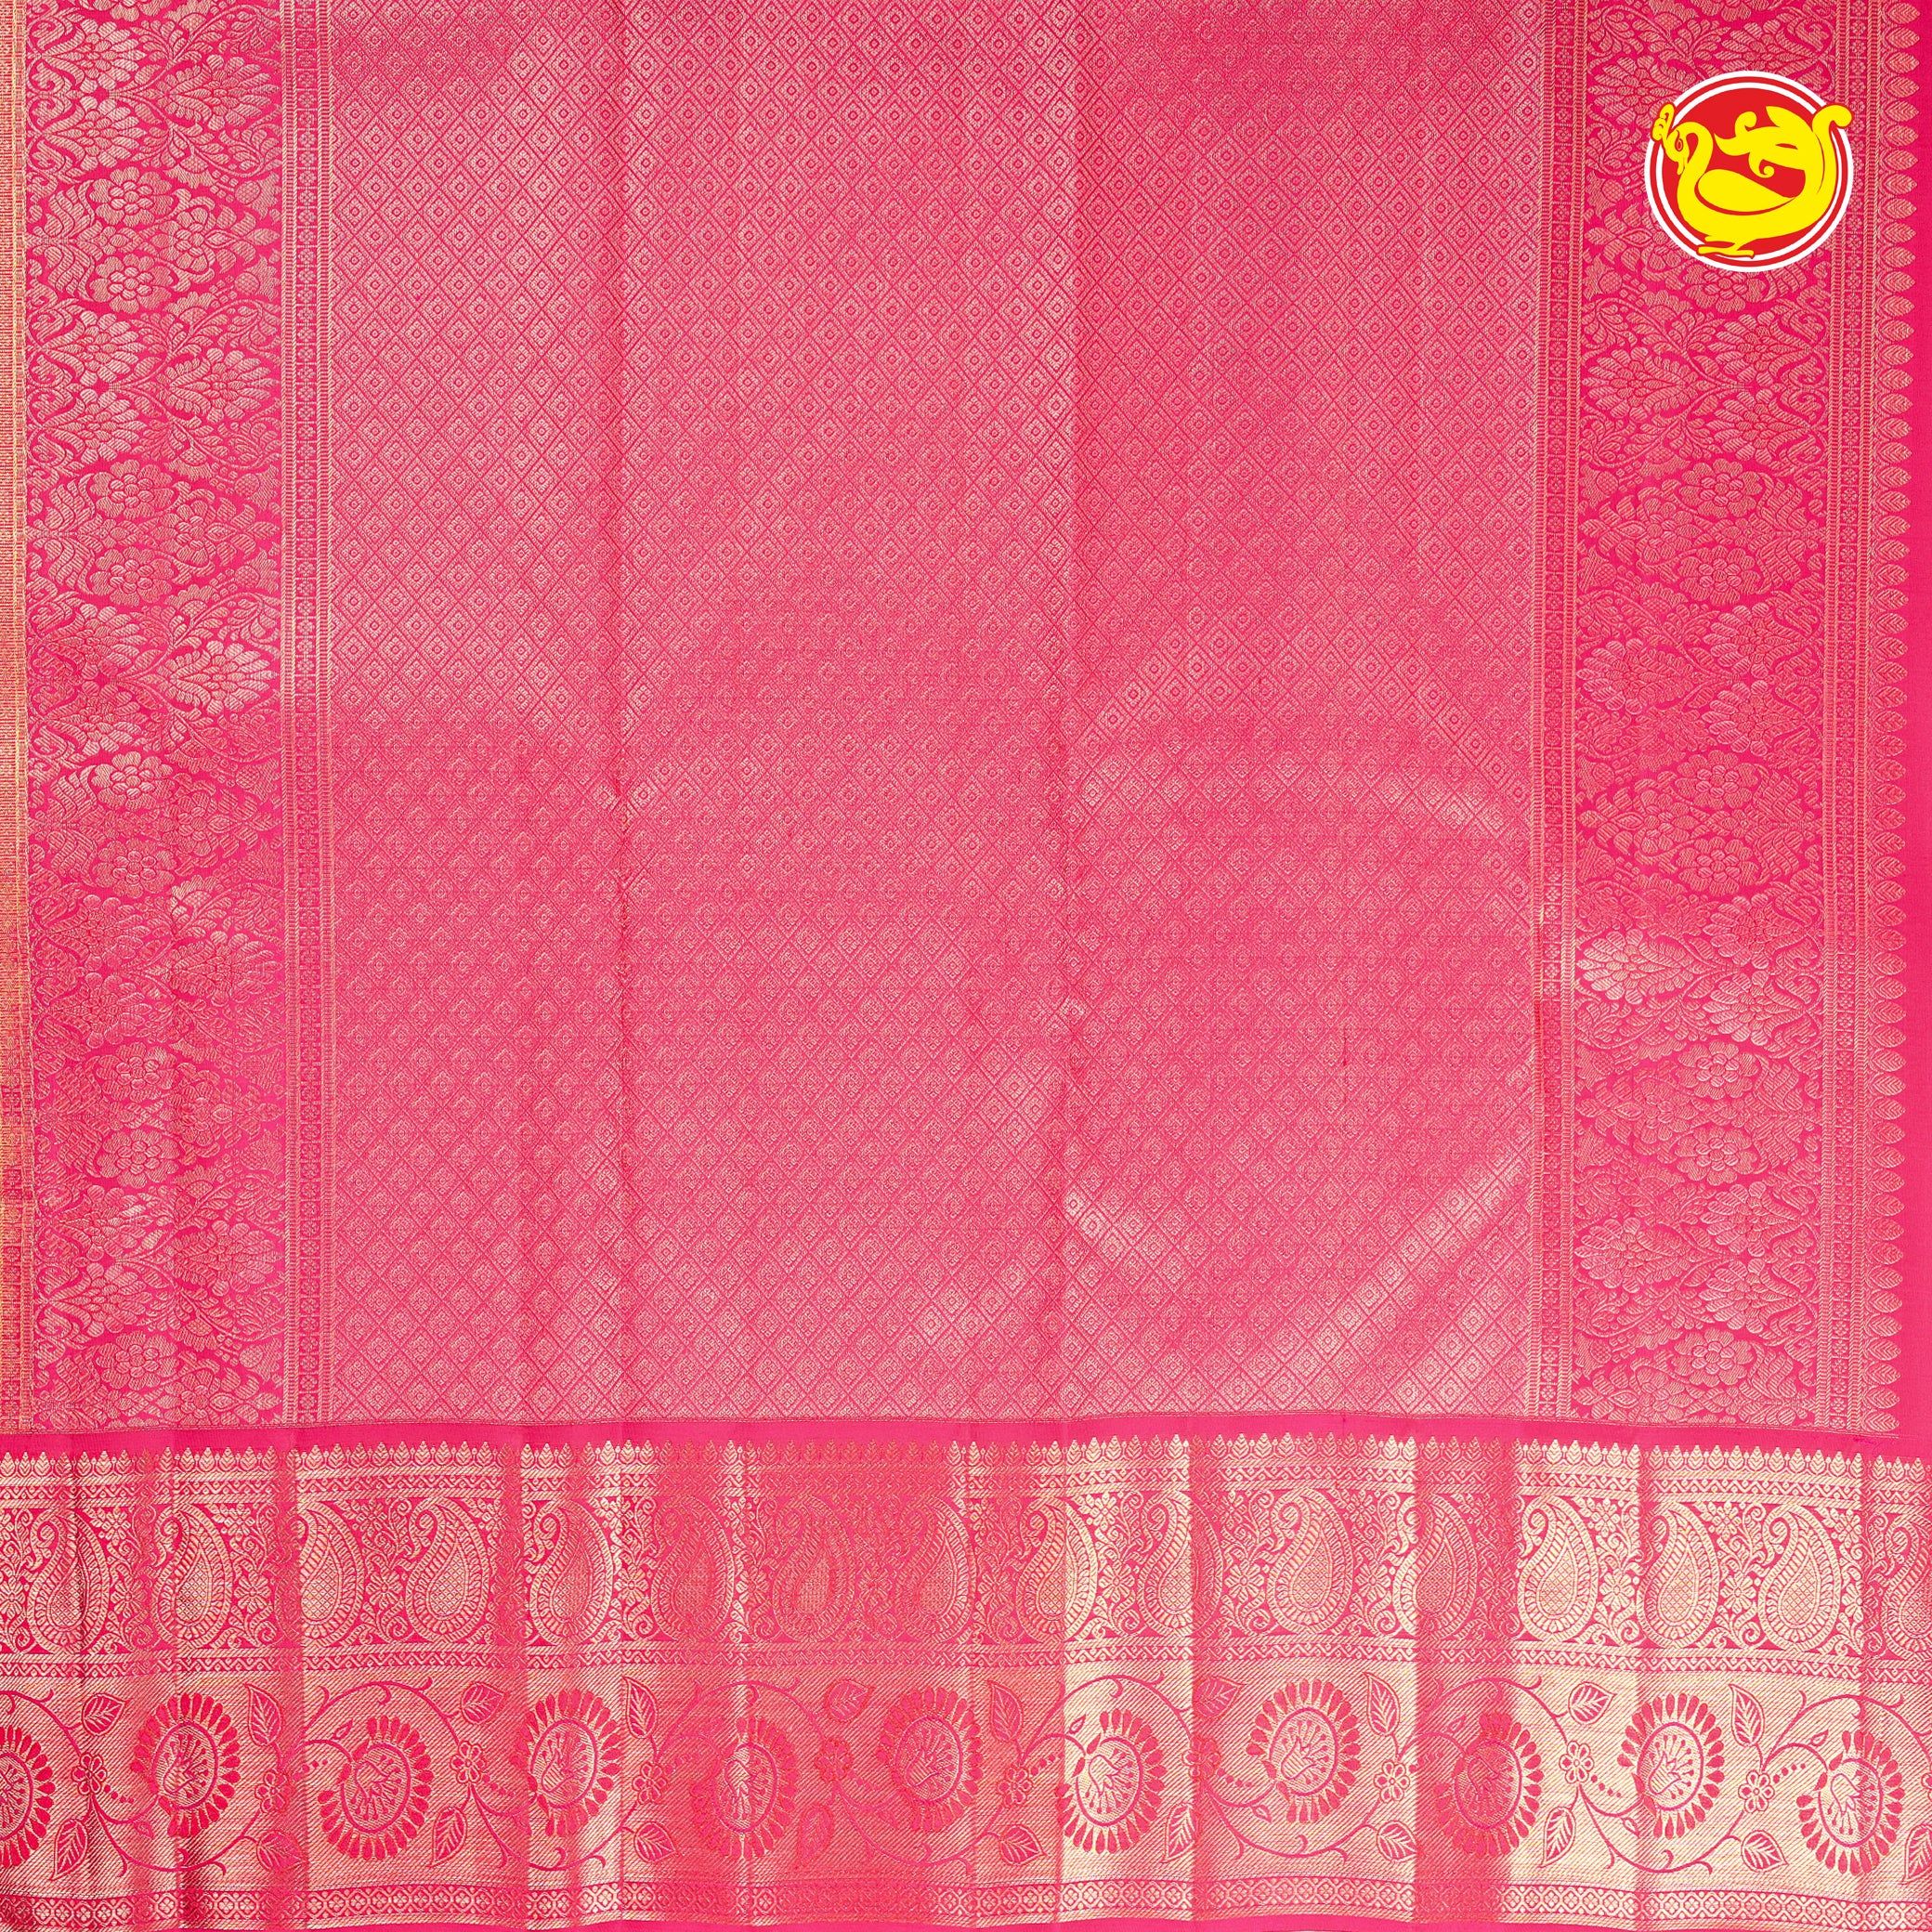 Mango yellow with Rani pink bridal silk saree